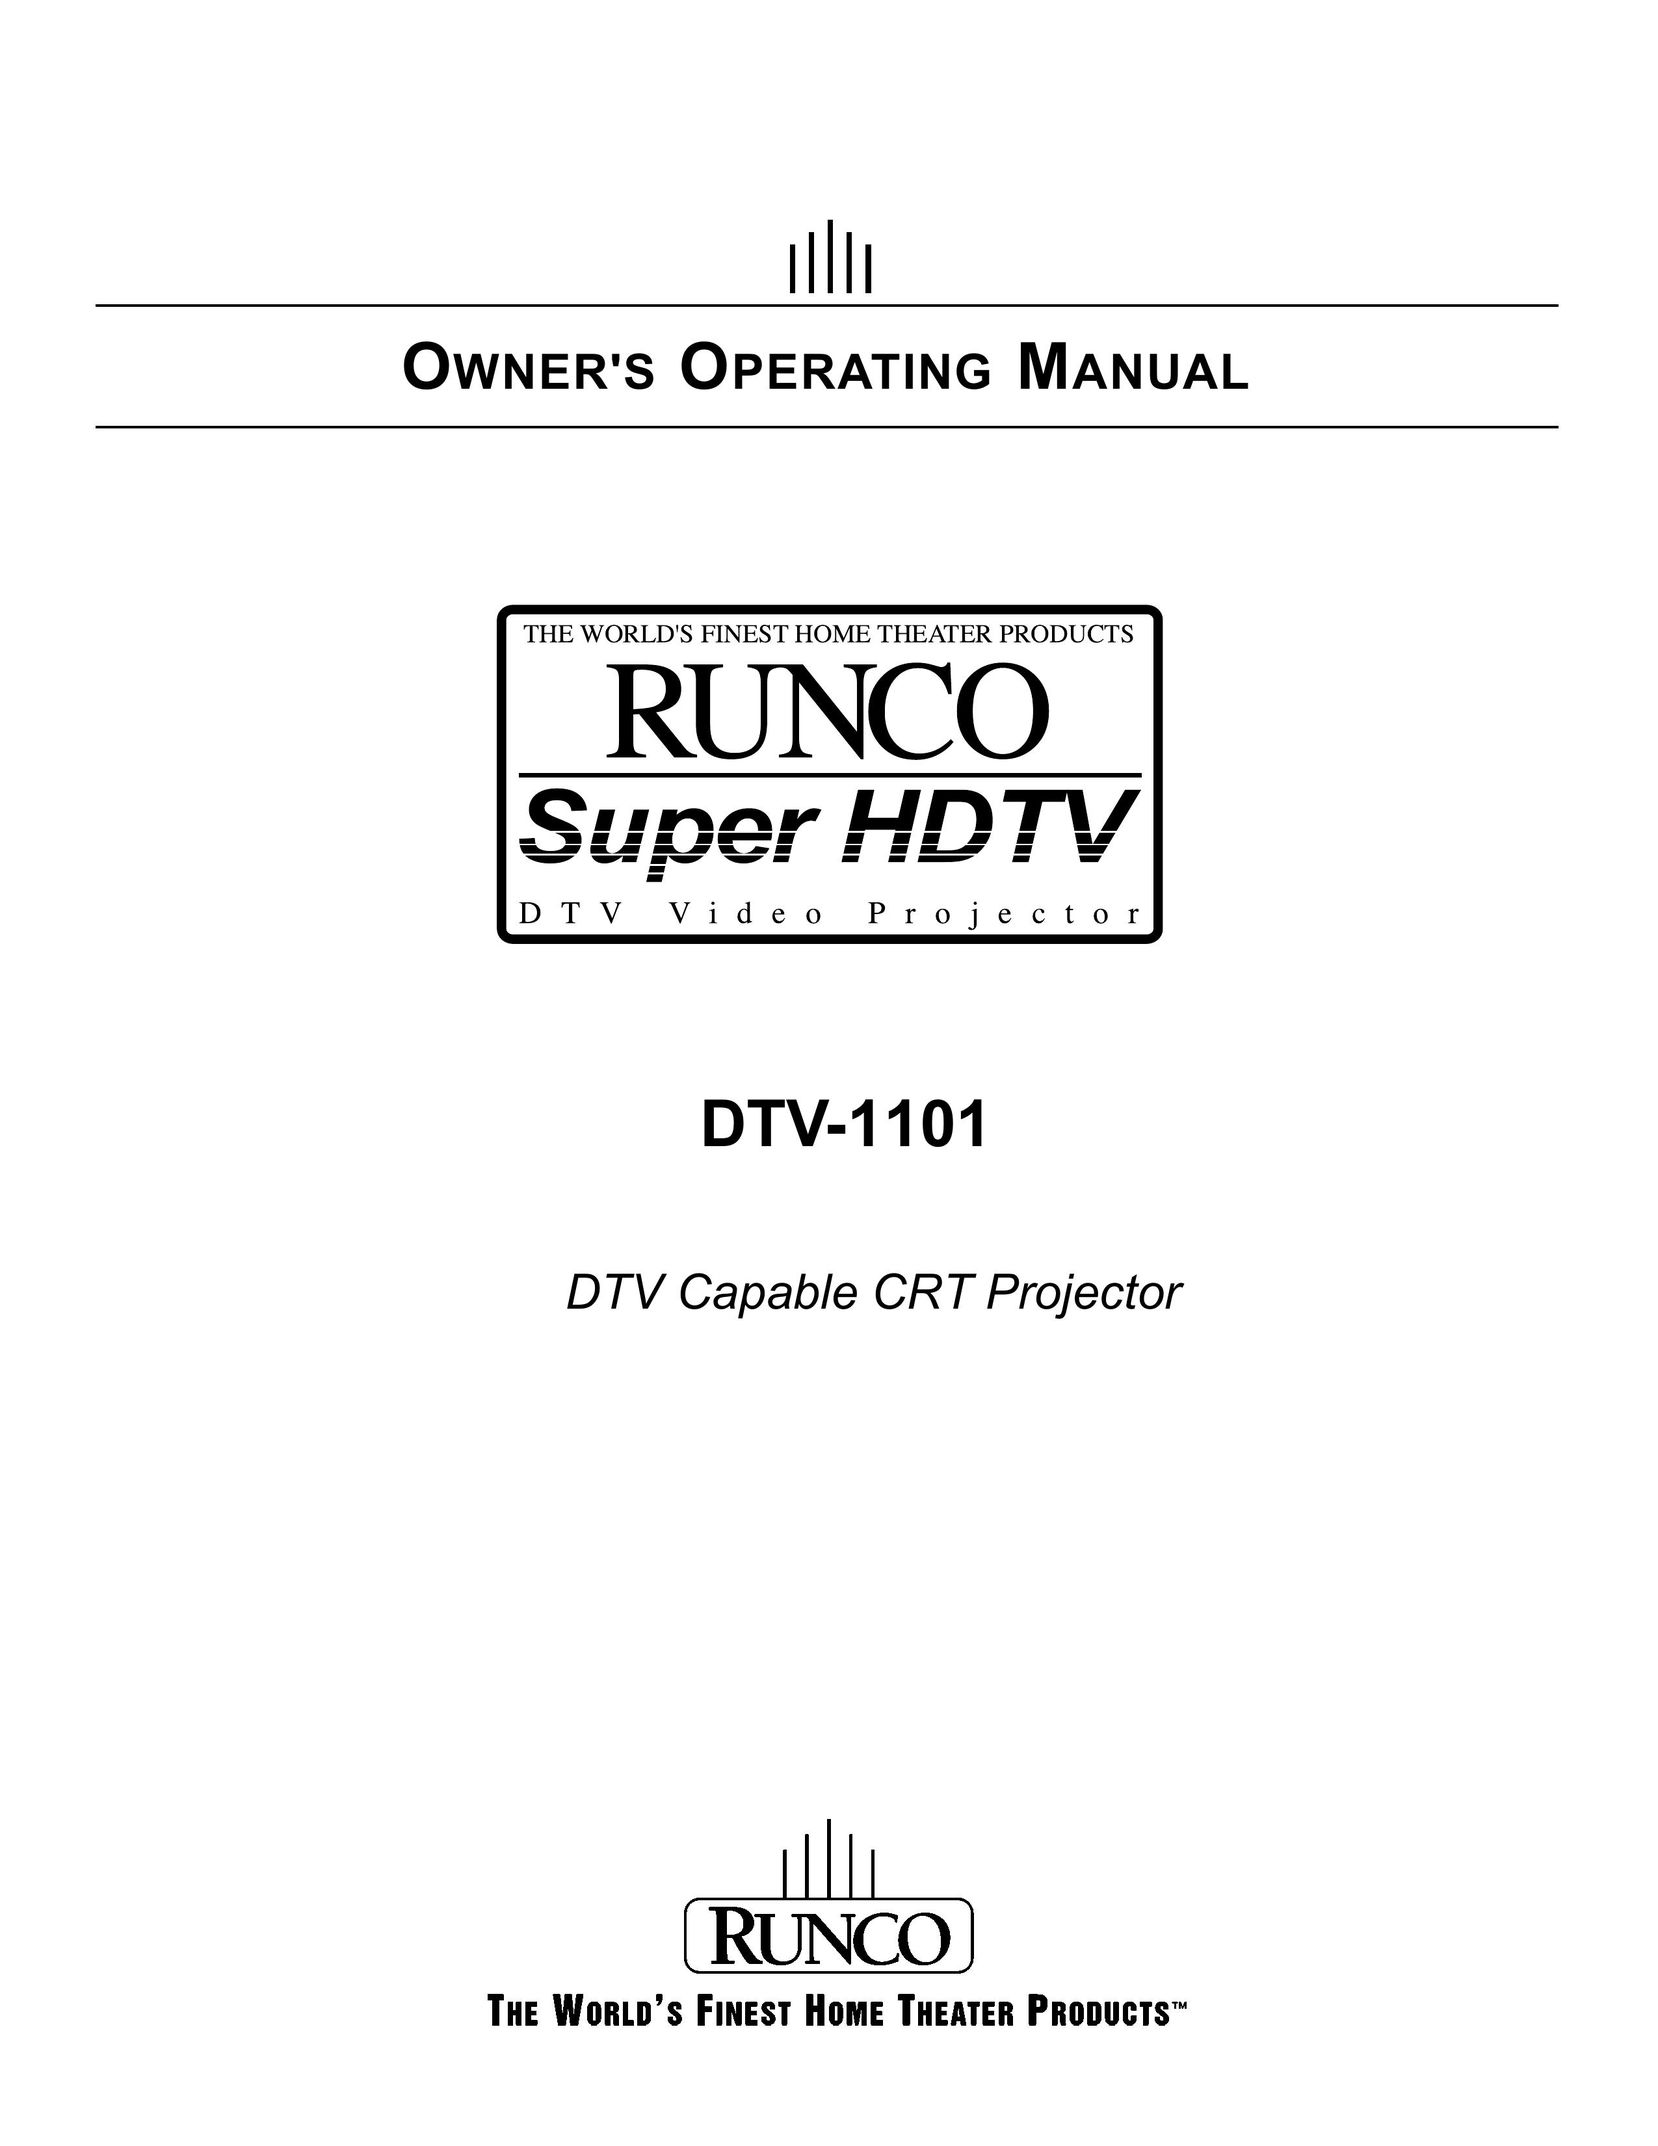 Runco DTV-1101 Projector User Manual